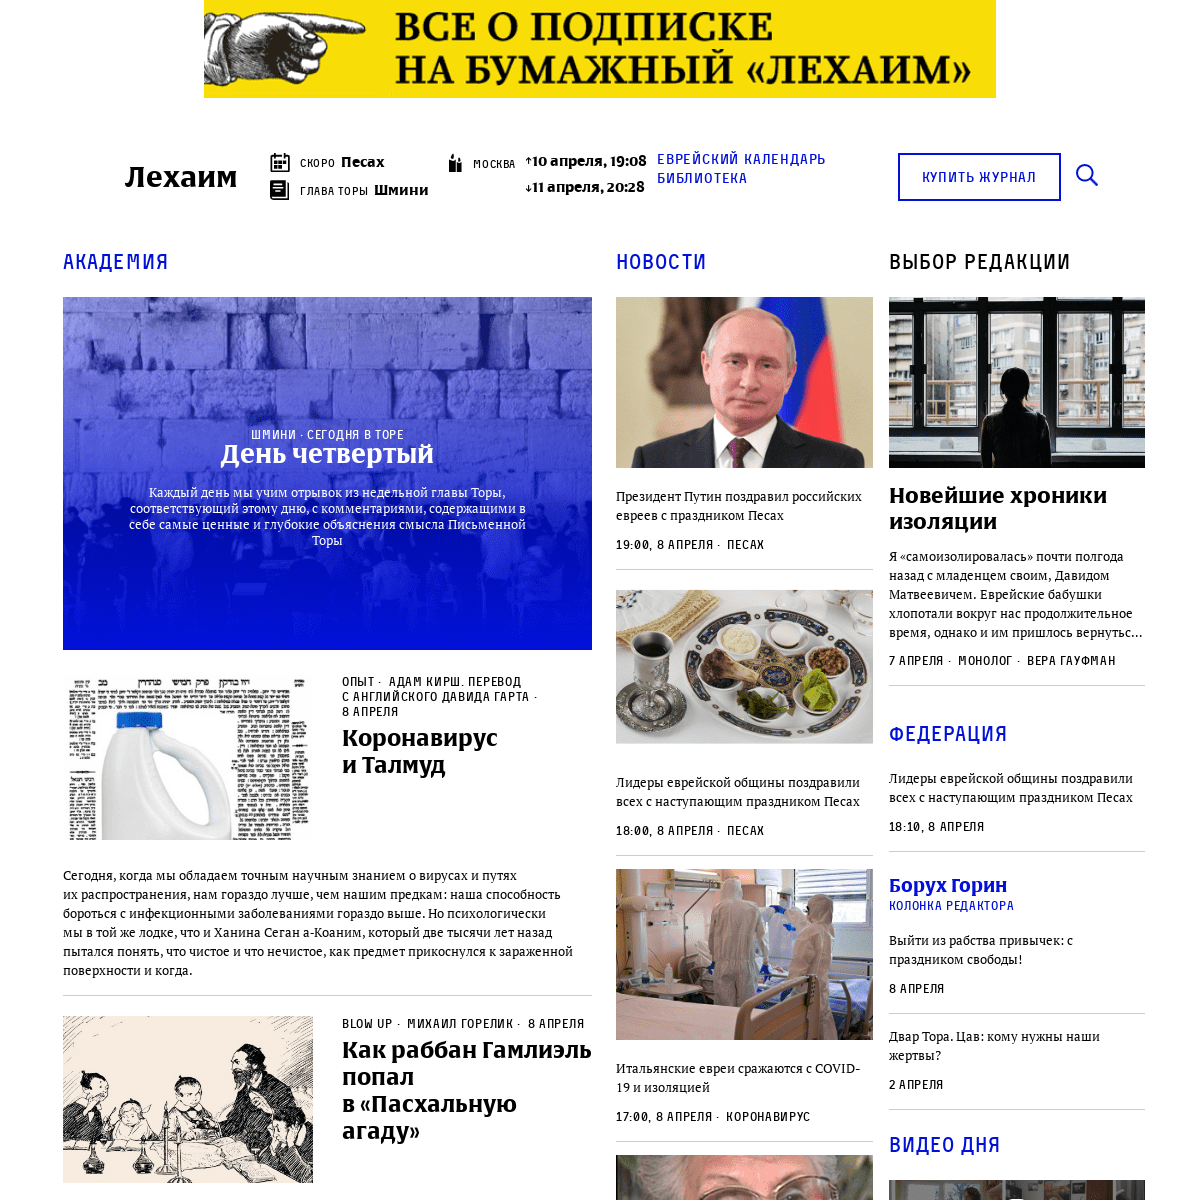 A complete backup of lechaim.ru